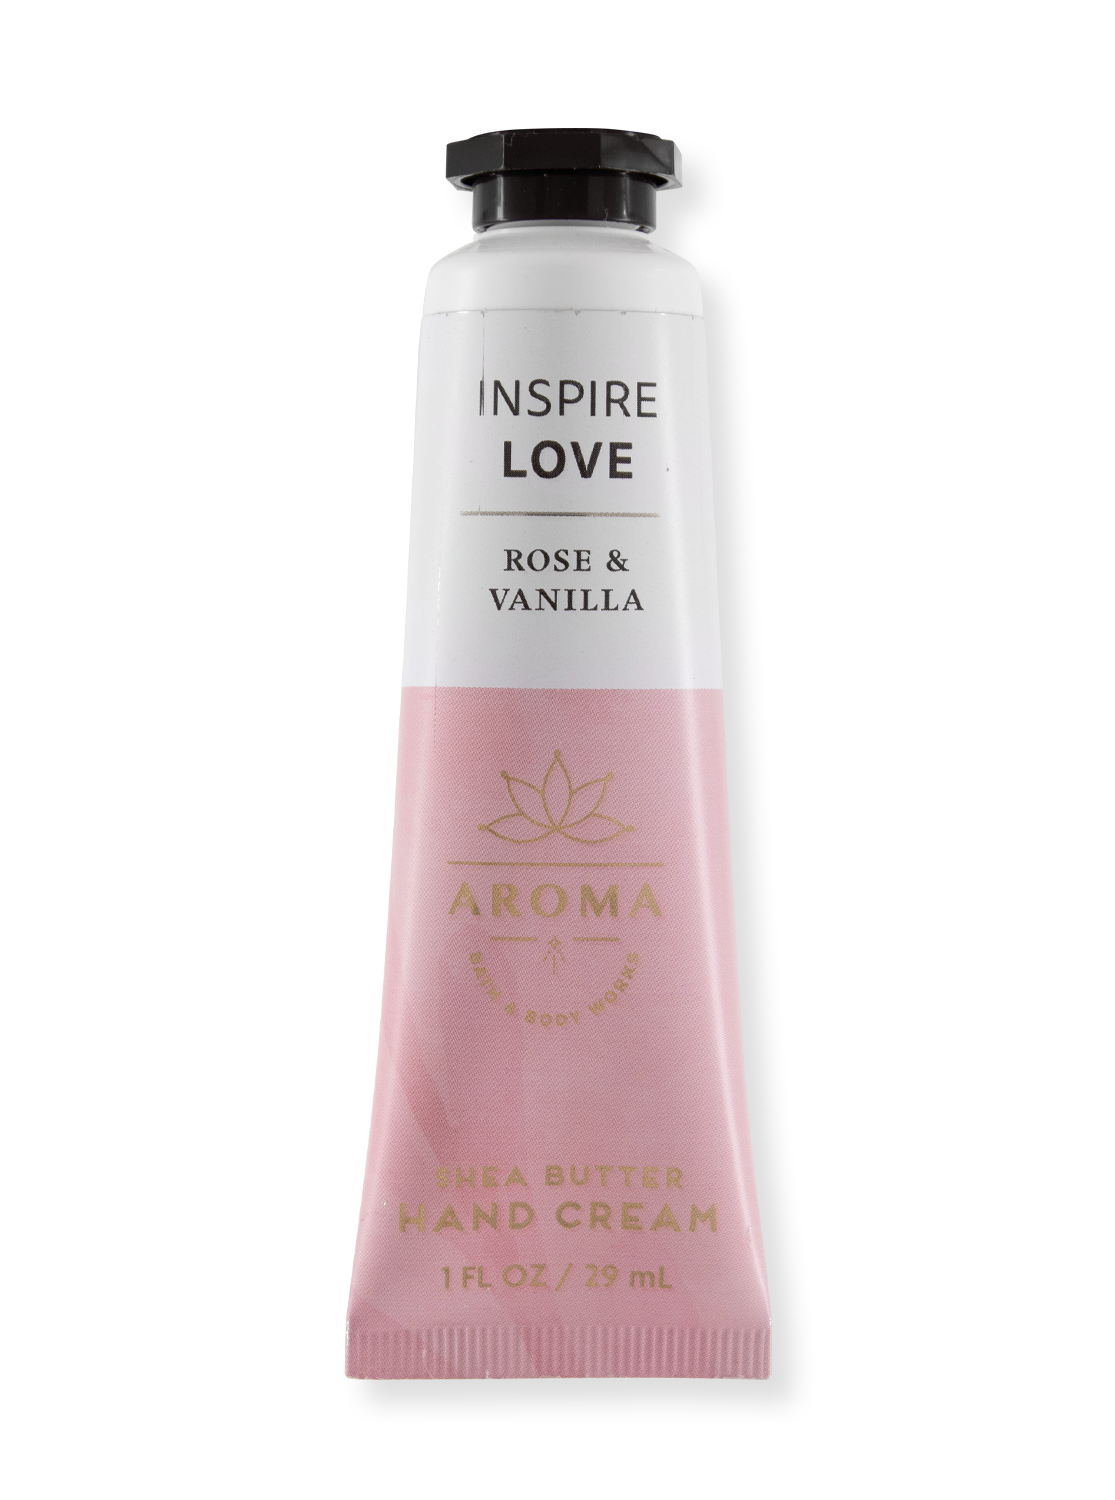 Crème pour les mains - Aroma - Inspire Love - Rose & Vanilla - 29ml